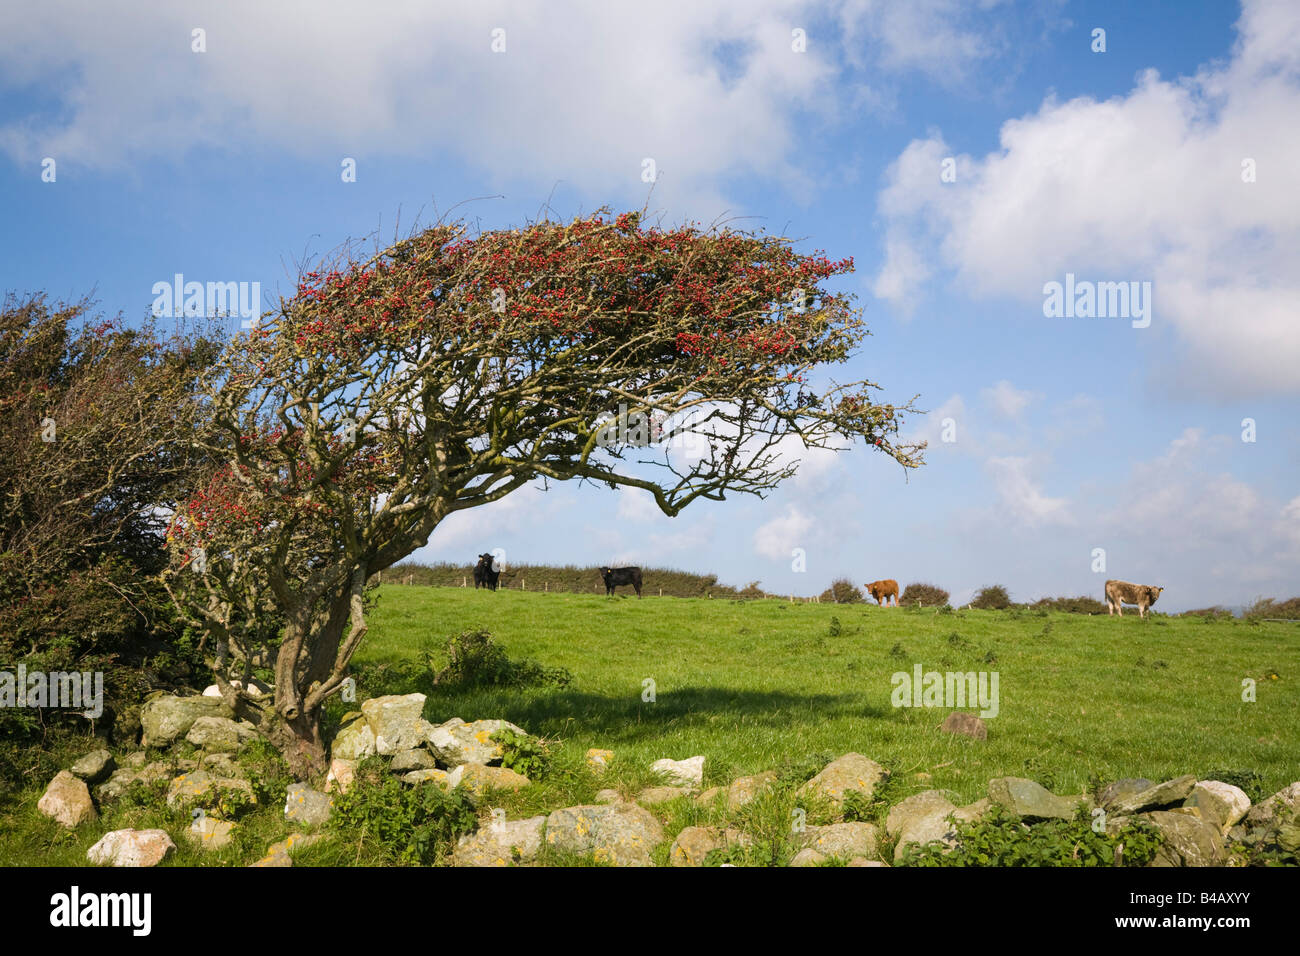 UK. Windblown Hawthorn bush with berries on field boundary Stock Photo